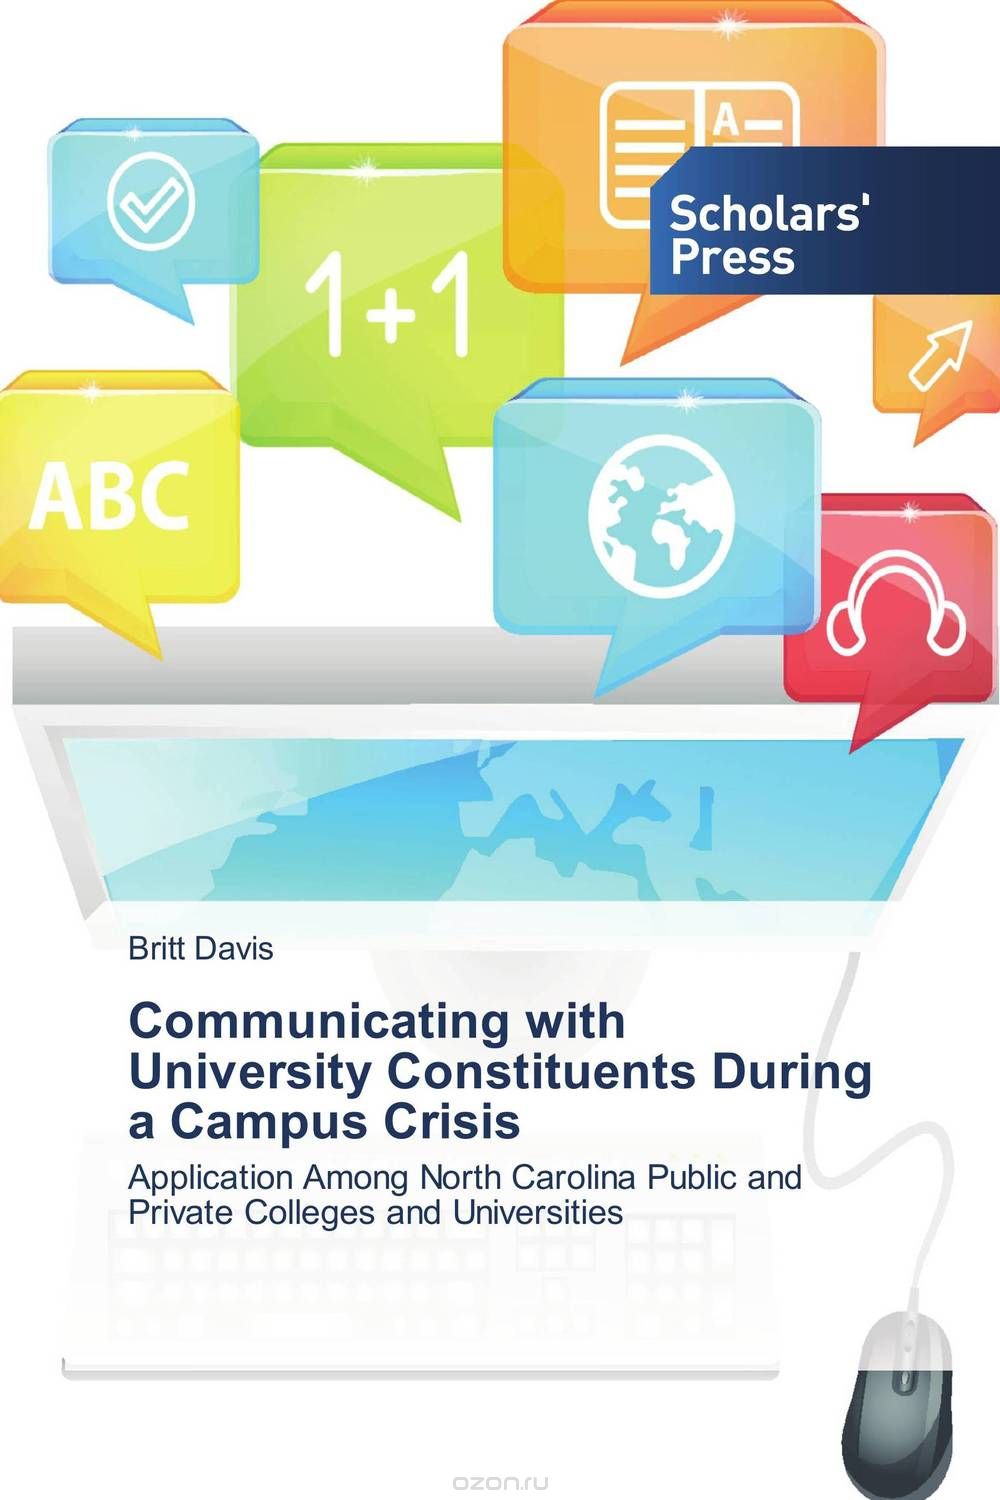 Скачать книгу "Communicating with University Constituents During a Campus Crisis"